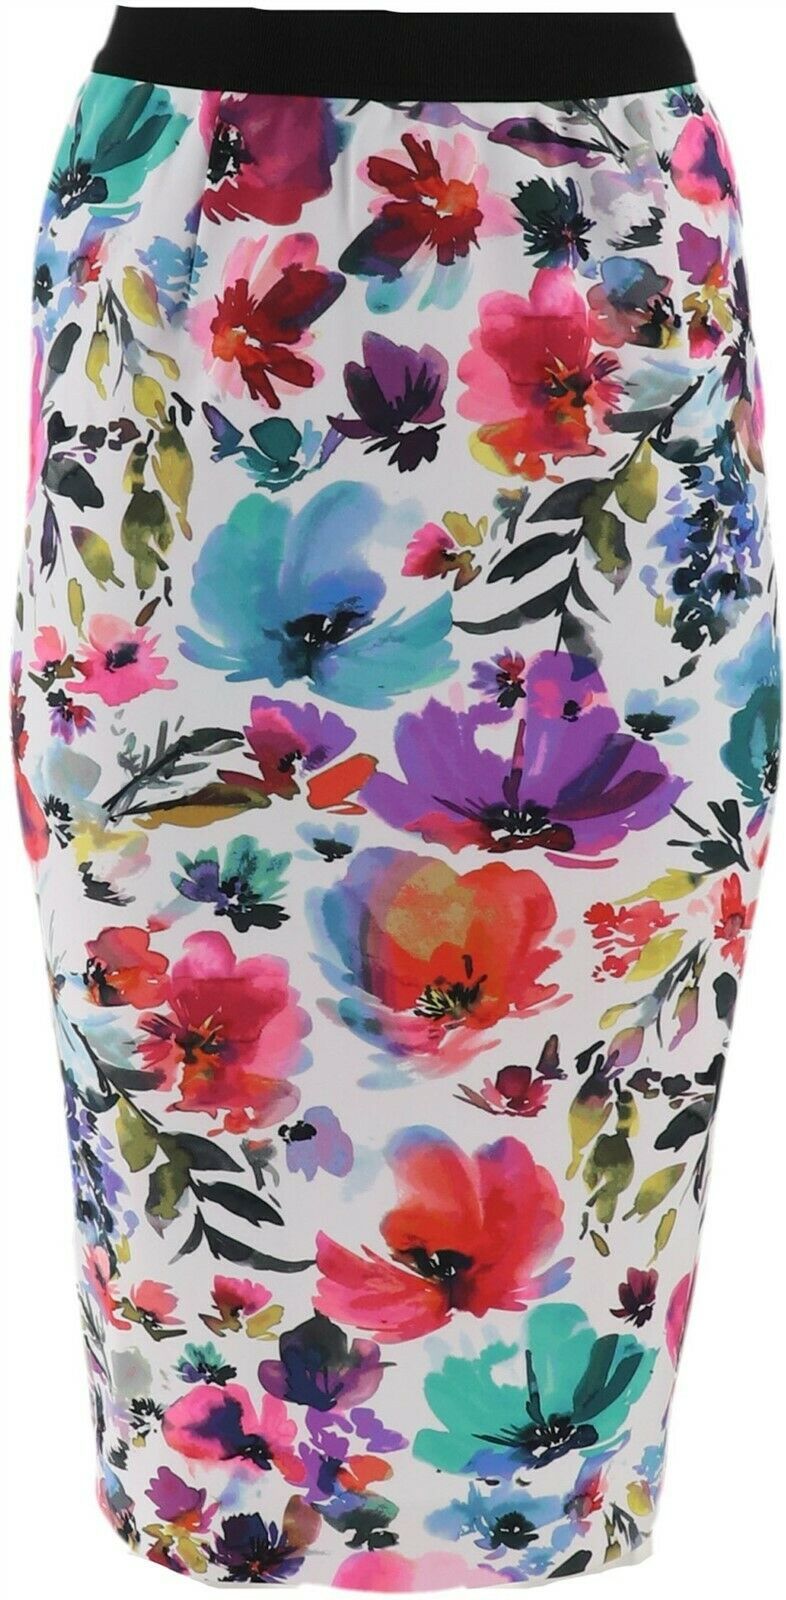 GILI Printed Floral Scuba Knit Pencil Skirt Multi 2 NEW A274386